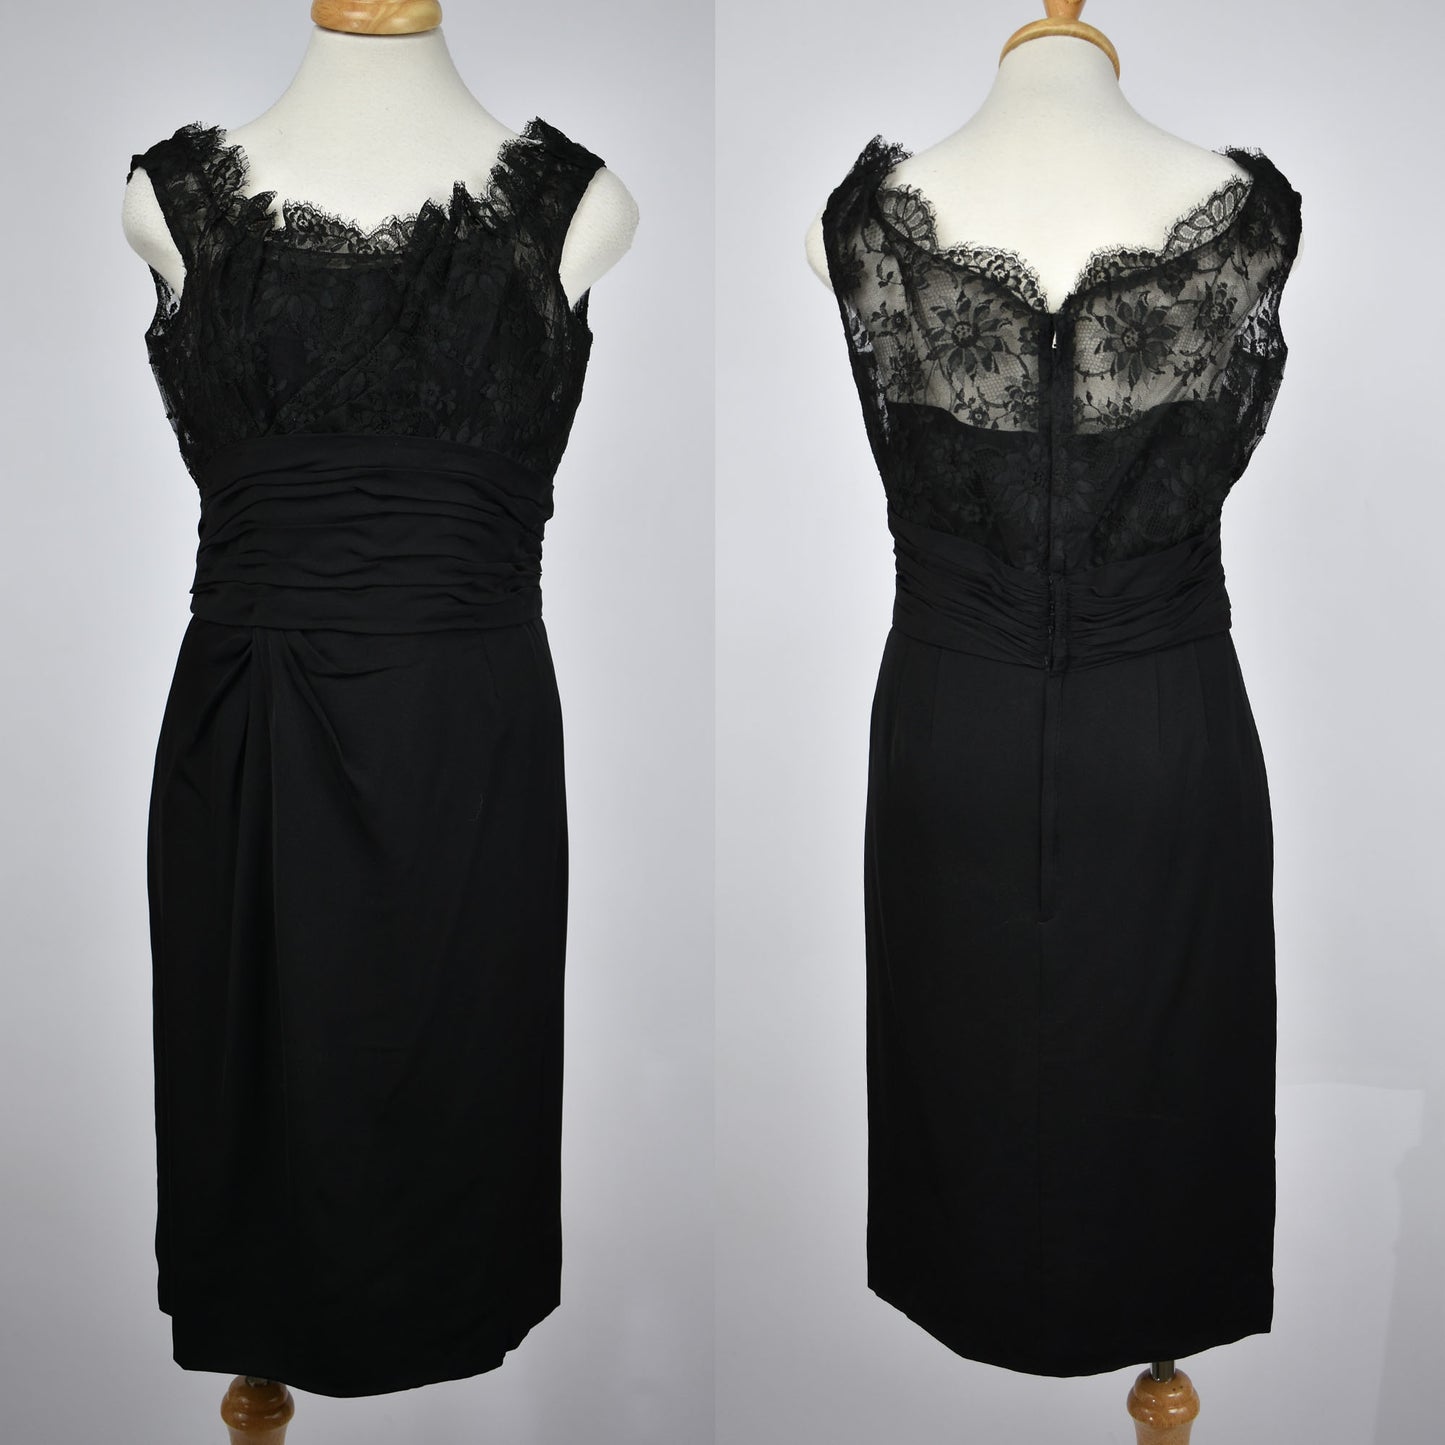 Vintage 50s / 60s  Ceil Chapman Cocktail Dress - Ruched Lace Over Strapless Black Bodice